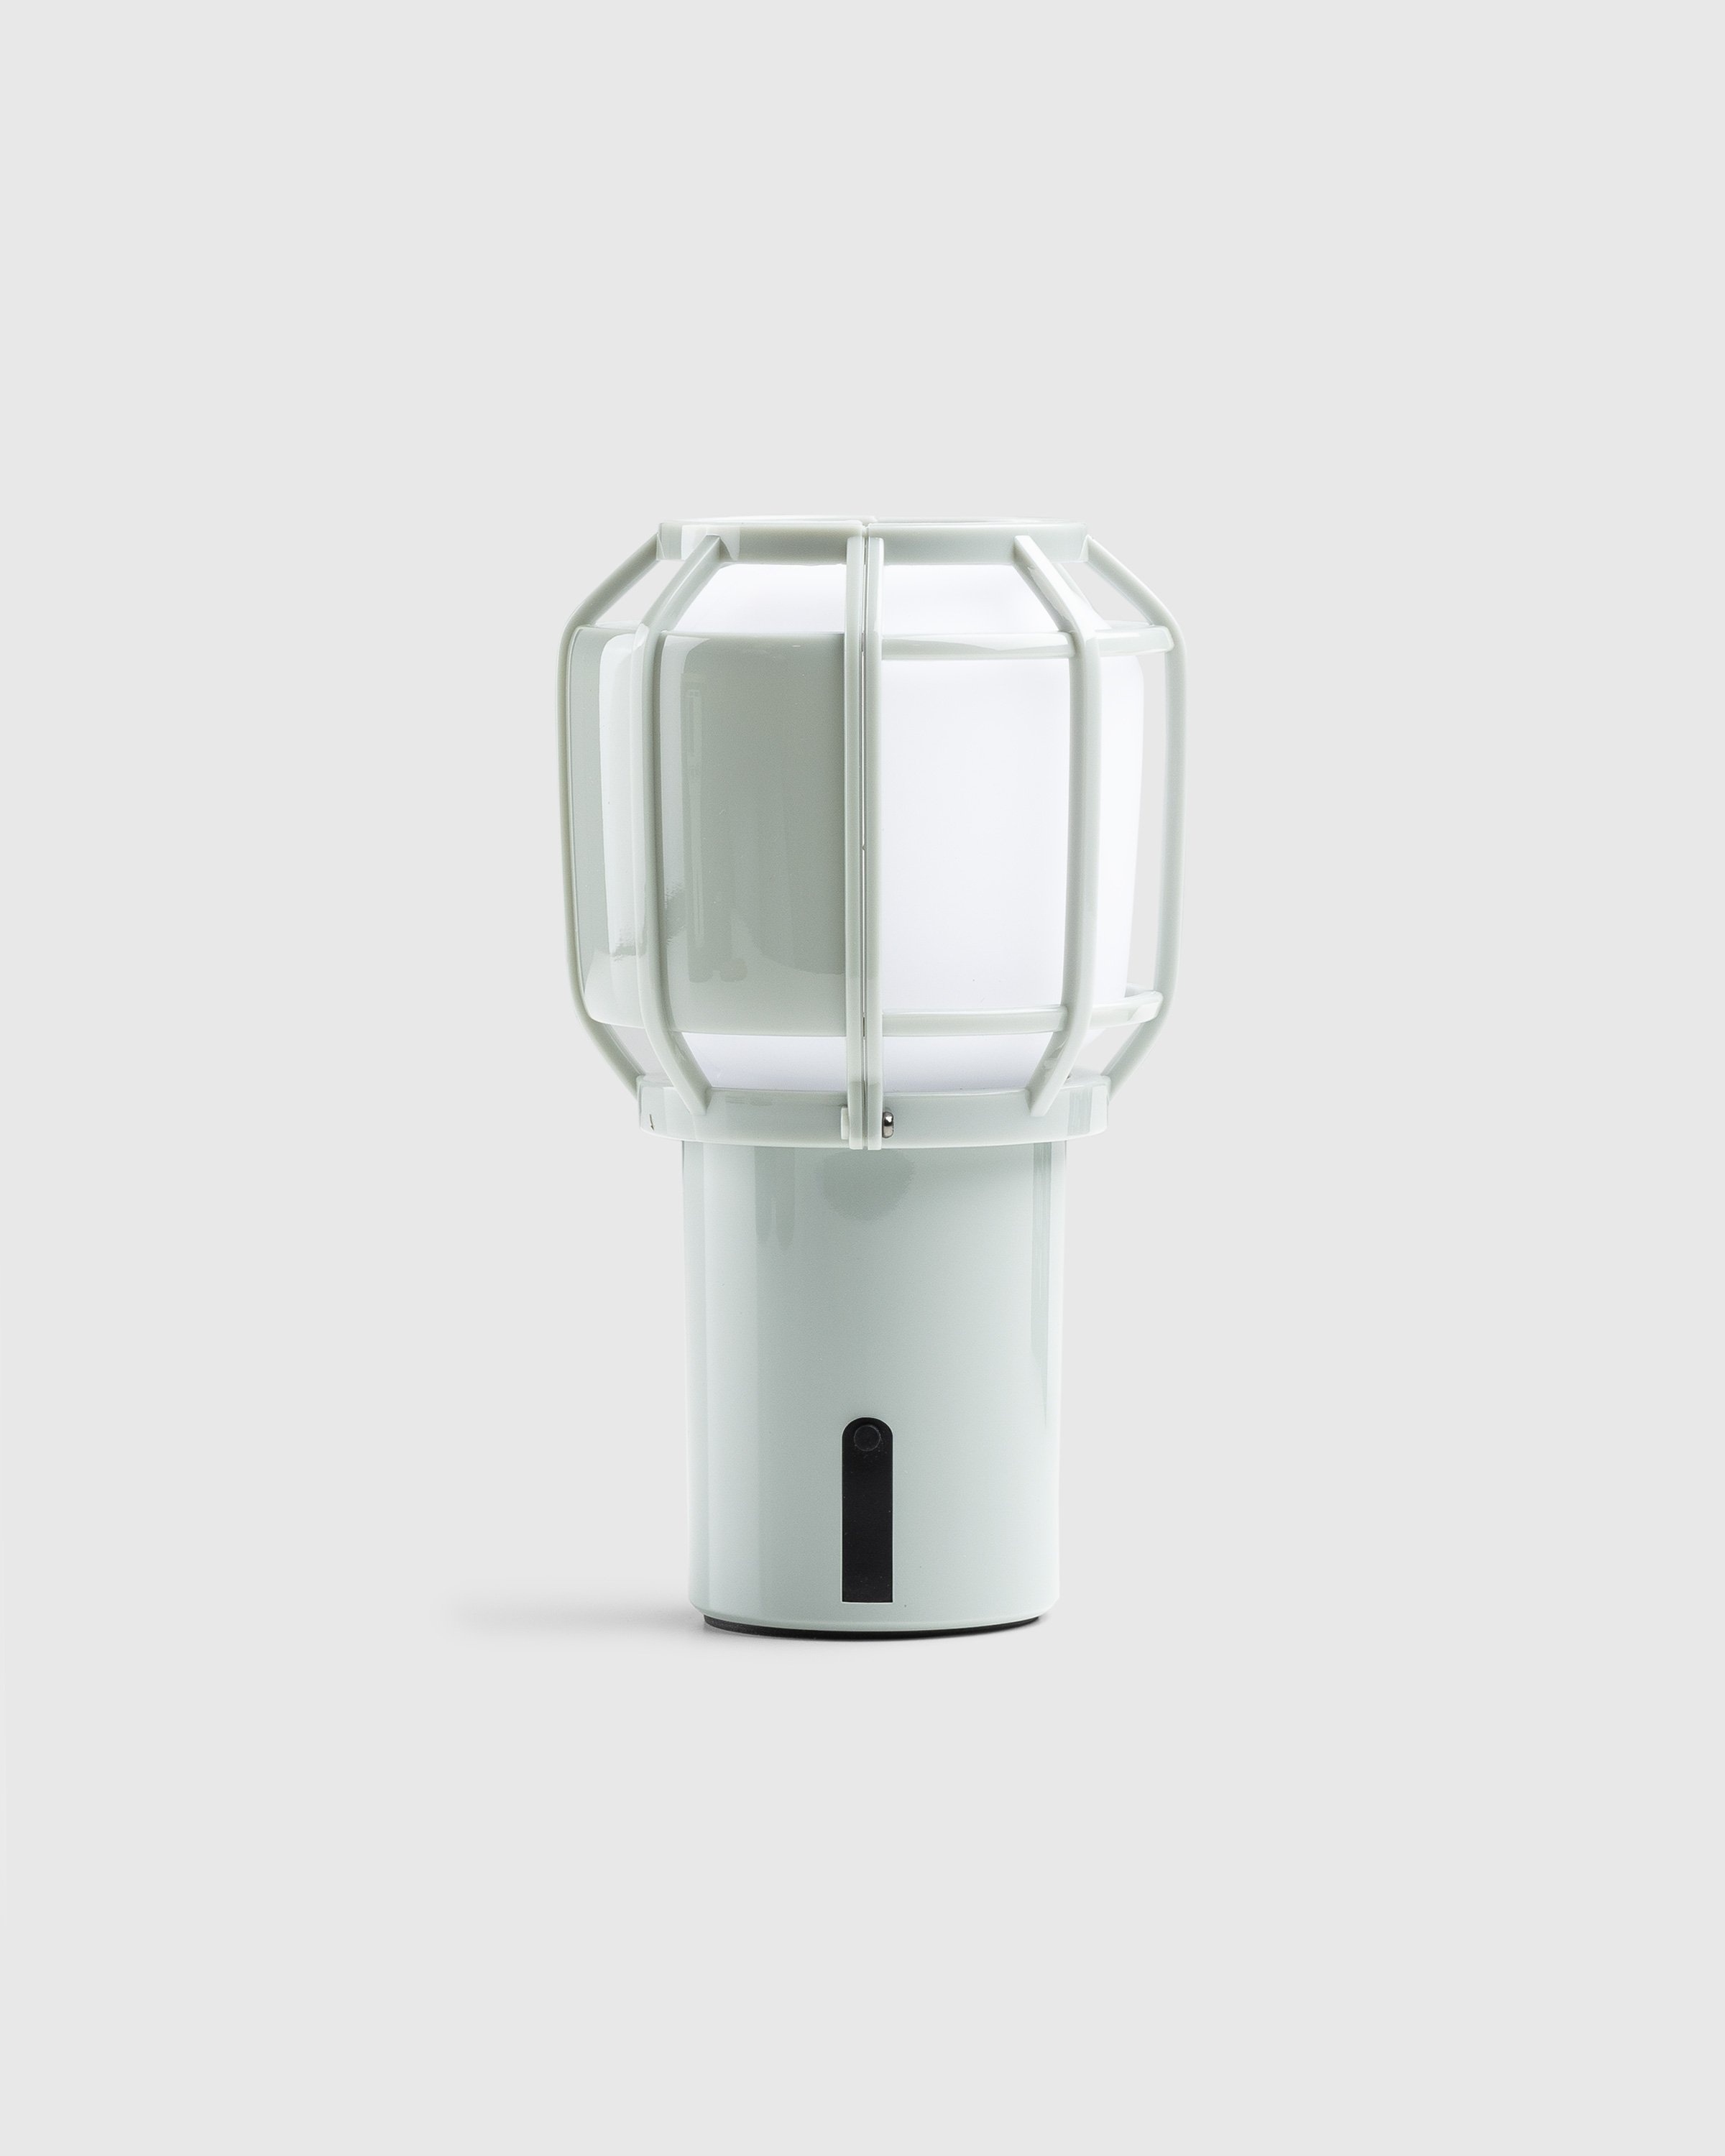 Buy Chispa lamp an Outdoor Portable light fixture - Marset USA